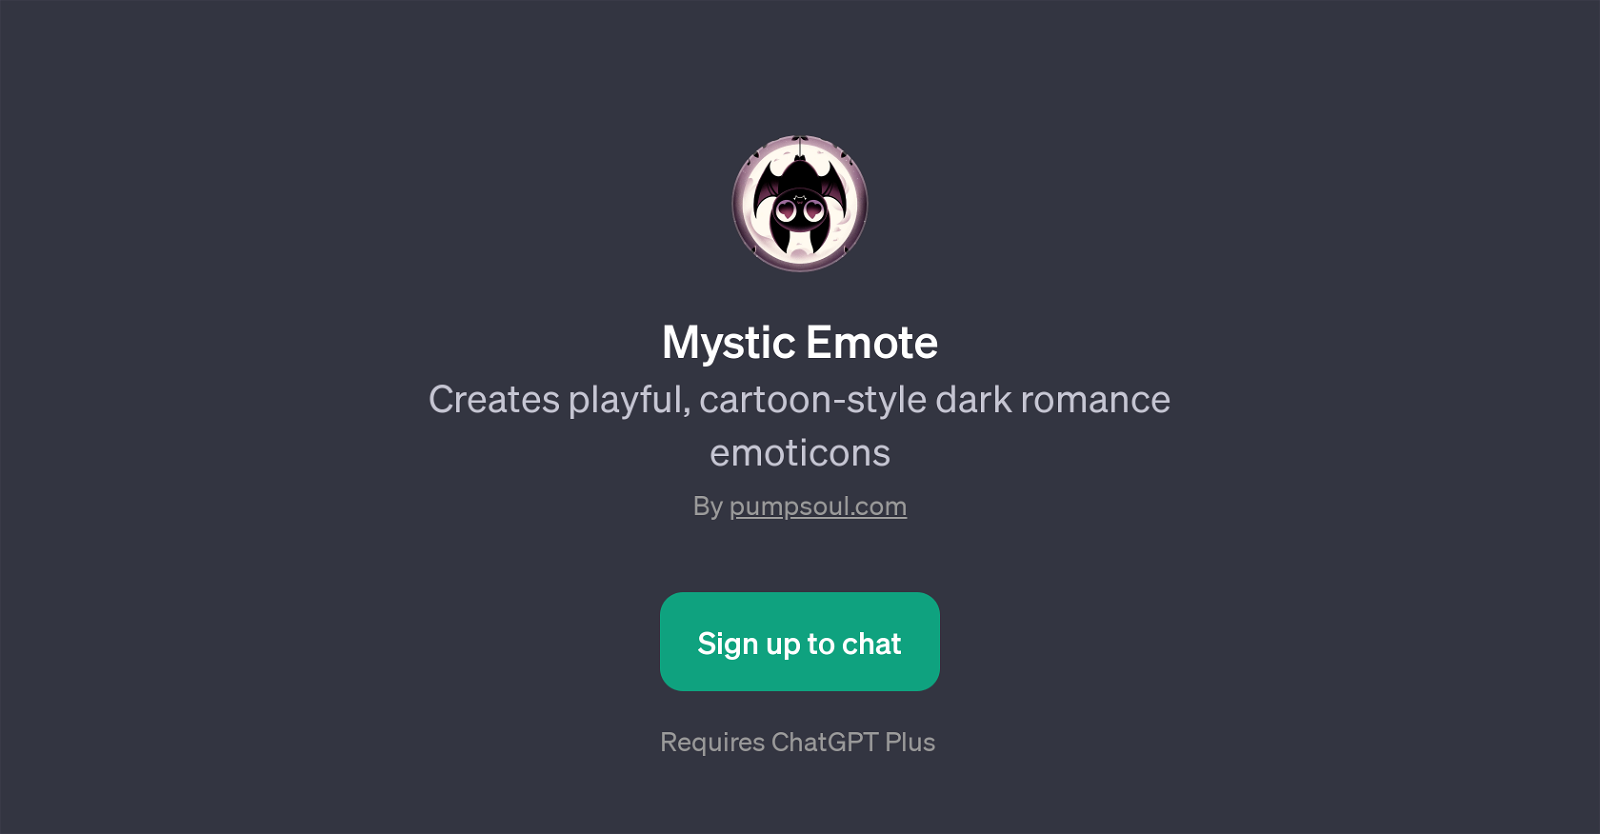 Mystic Emote website